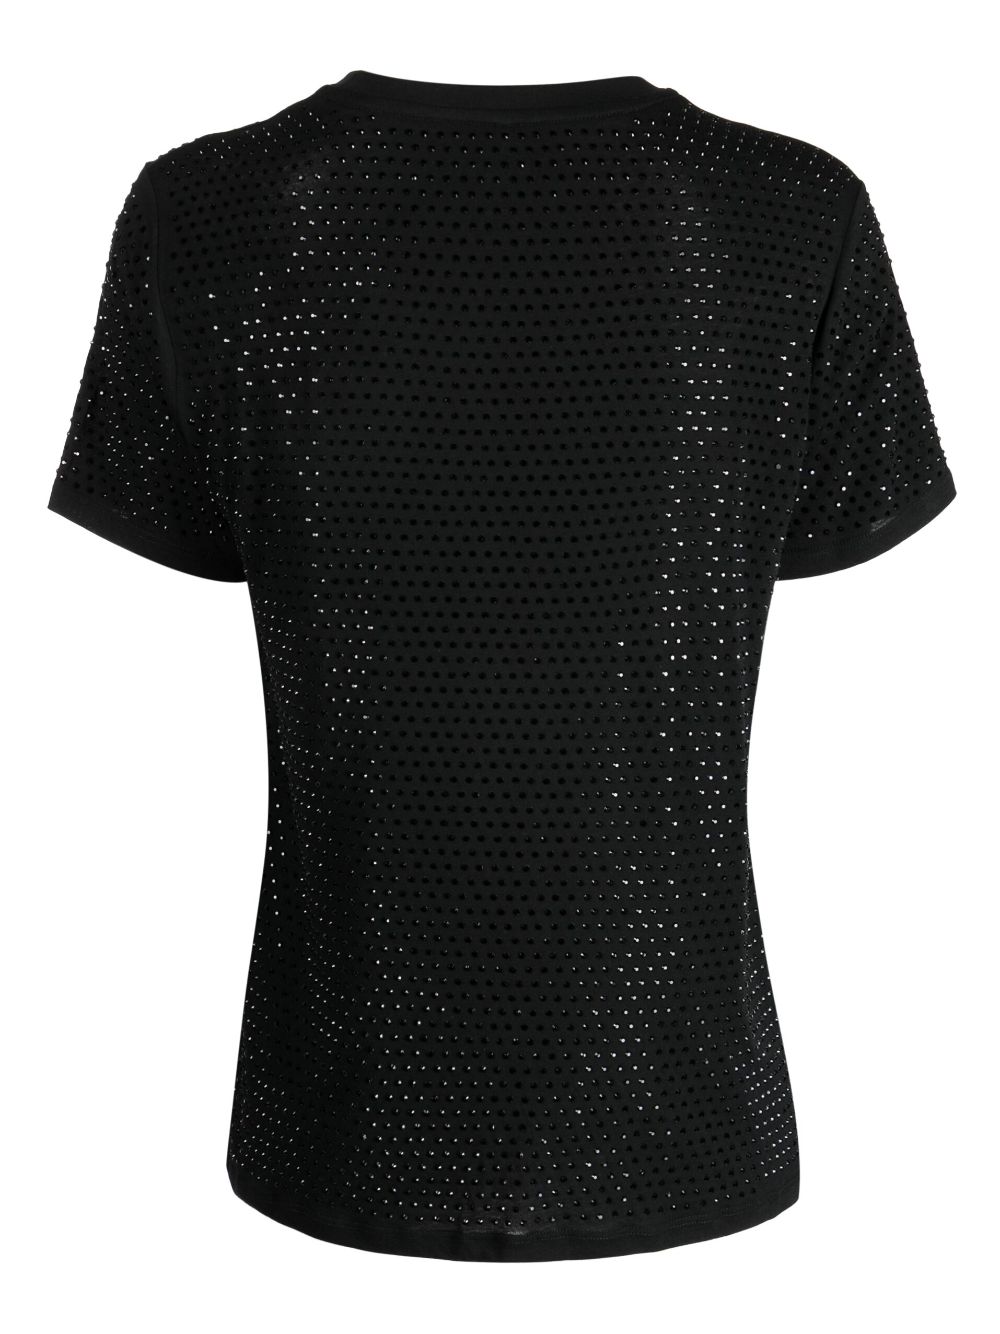 Cynthia Rowley T-shirt verfraaid met kristallen - Zwart